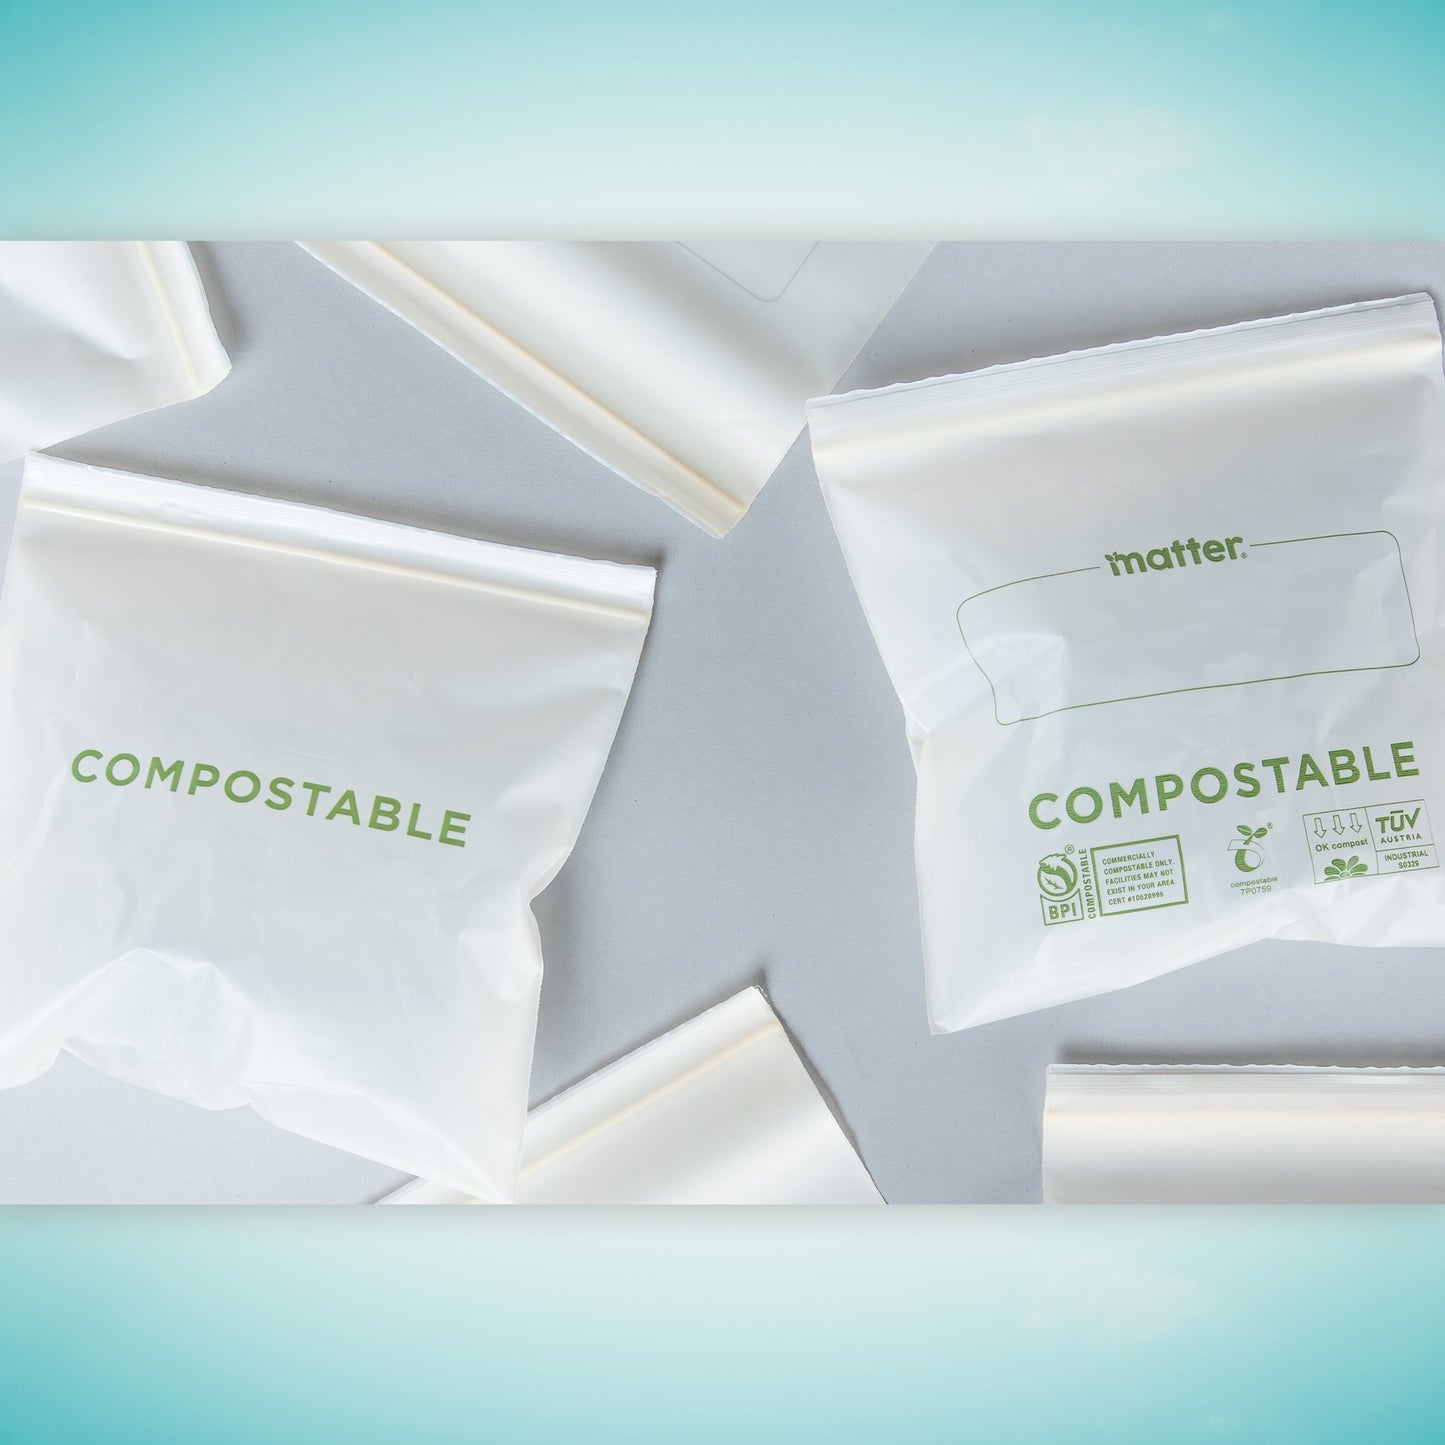 Matter Compostable Sandwich Bags - 50 Count